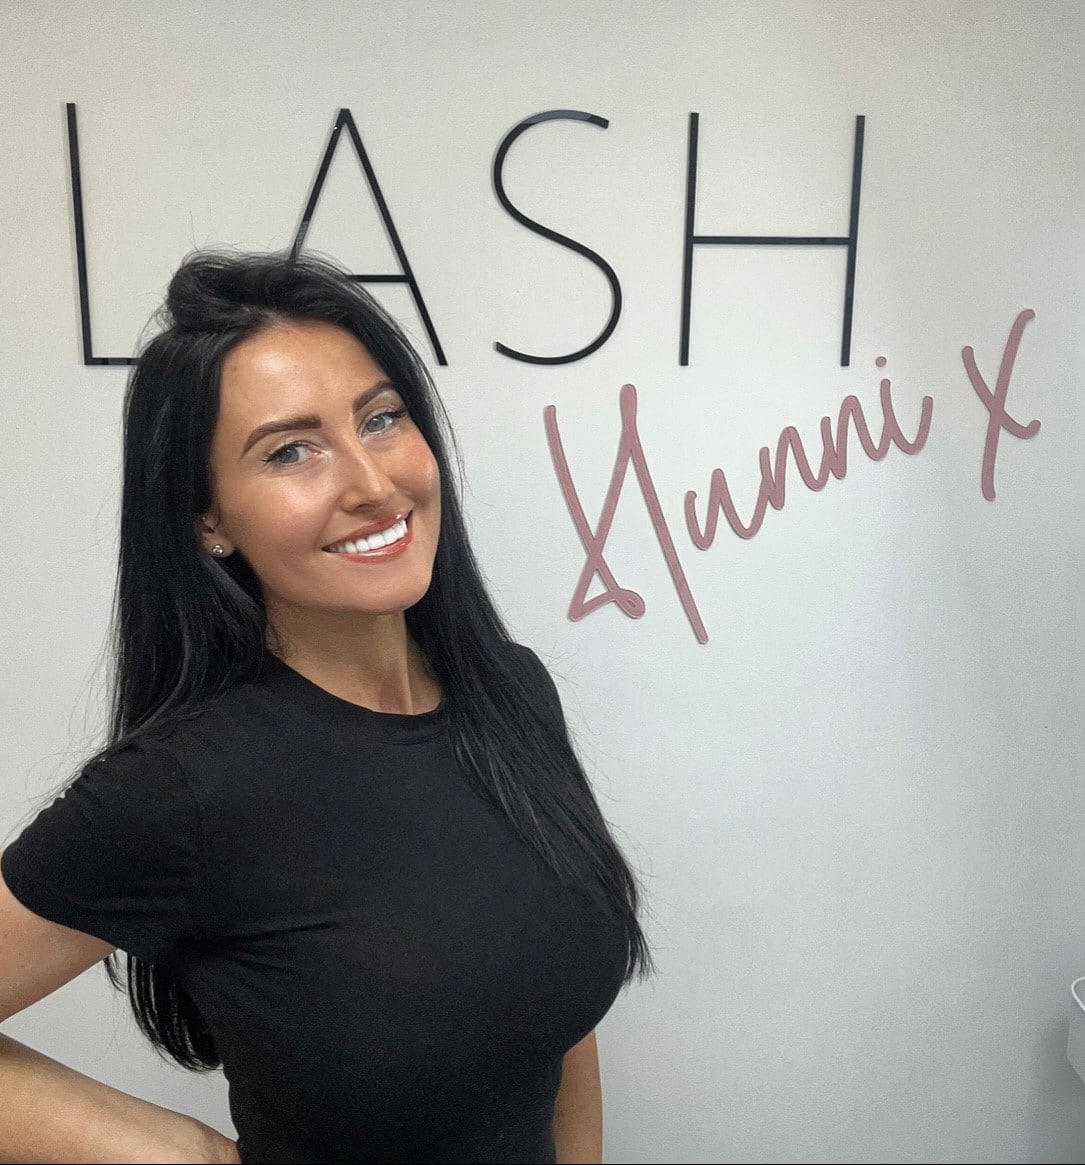 Laura with her Lash Hunni branding